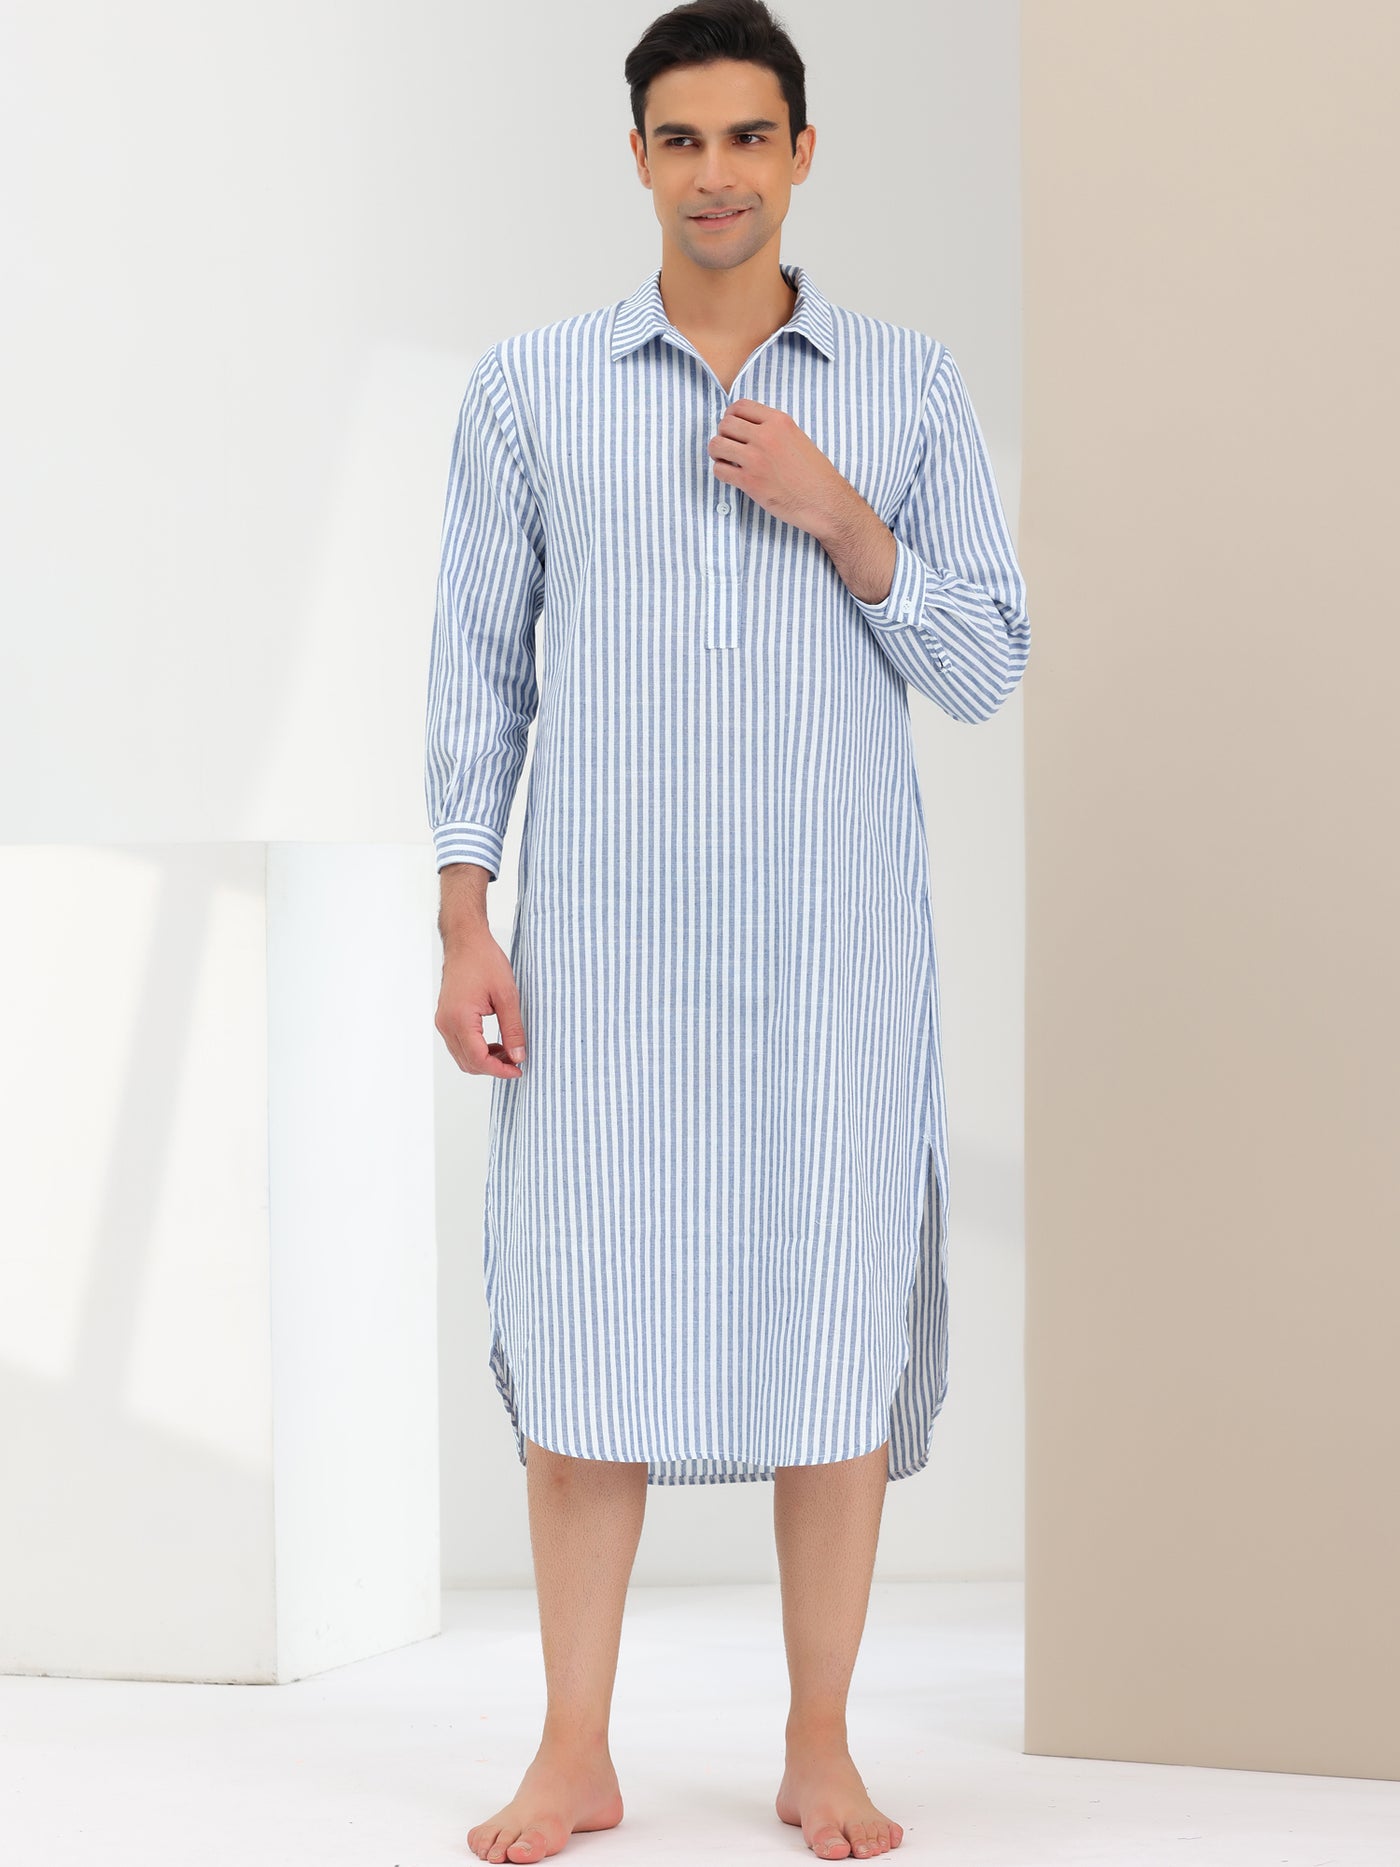 Bublédon Men's Striped Nightshirts Long Sleeves Sleep Nightgown Pajamas Shirts